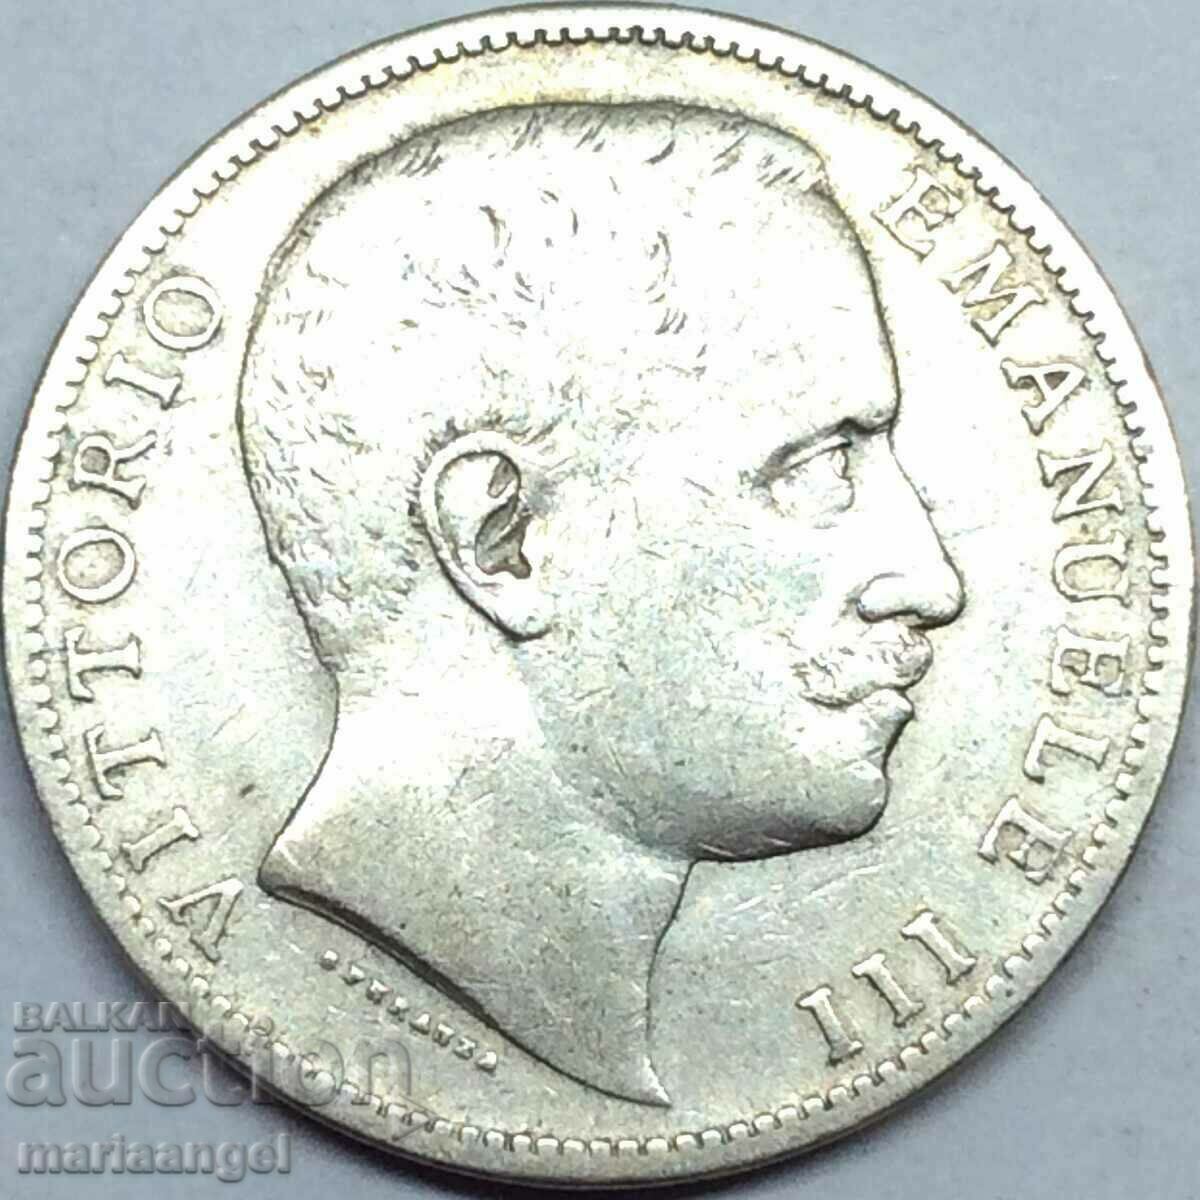 2 lira 1905 Italy Savoy Eagle - Sabauda silver